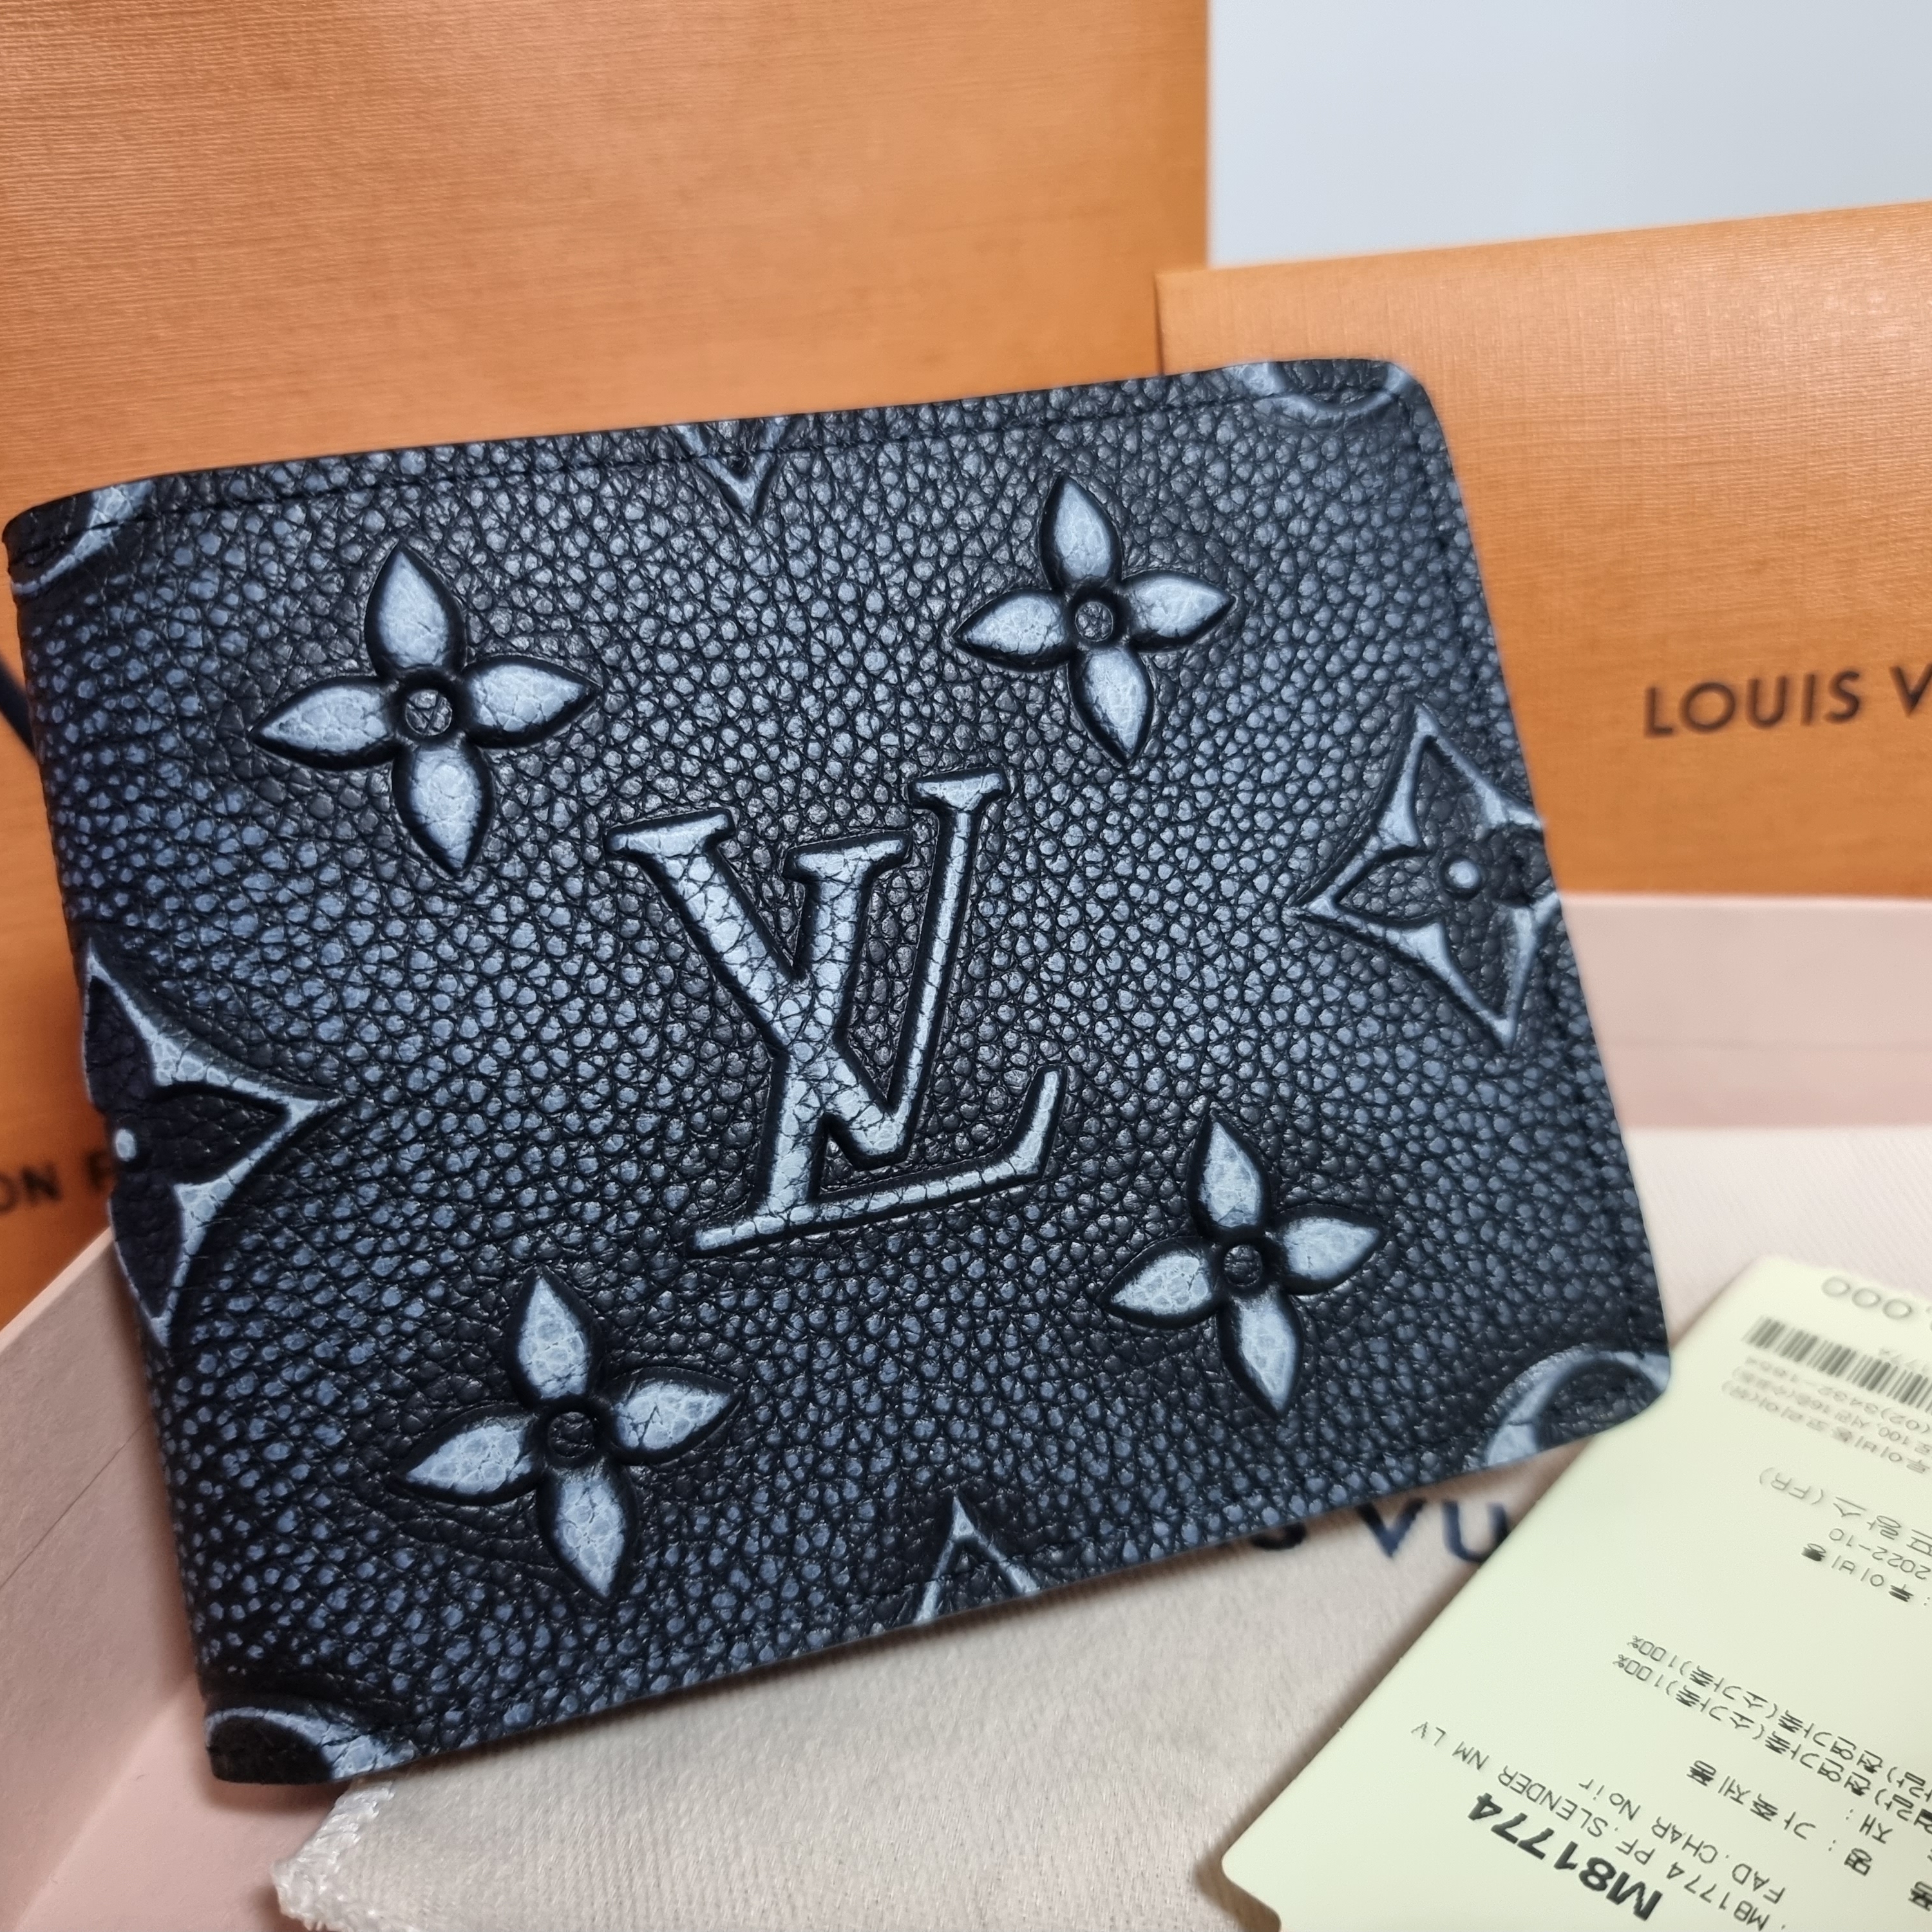 Louis Vuitton M81774 Slender Wallet